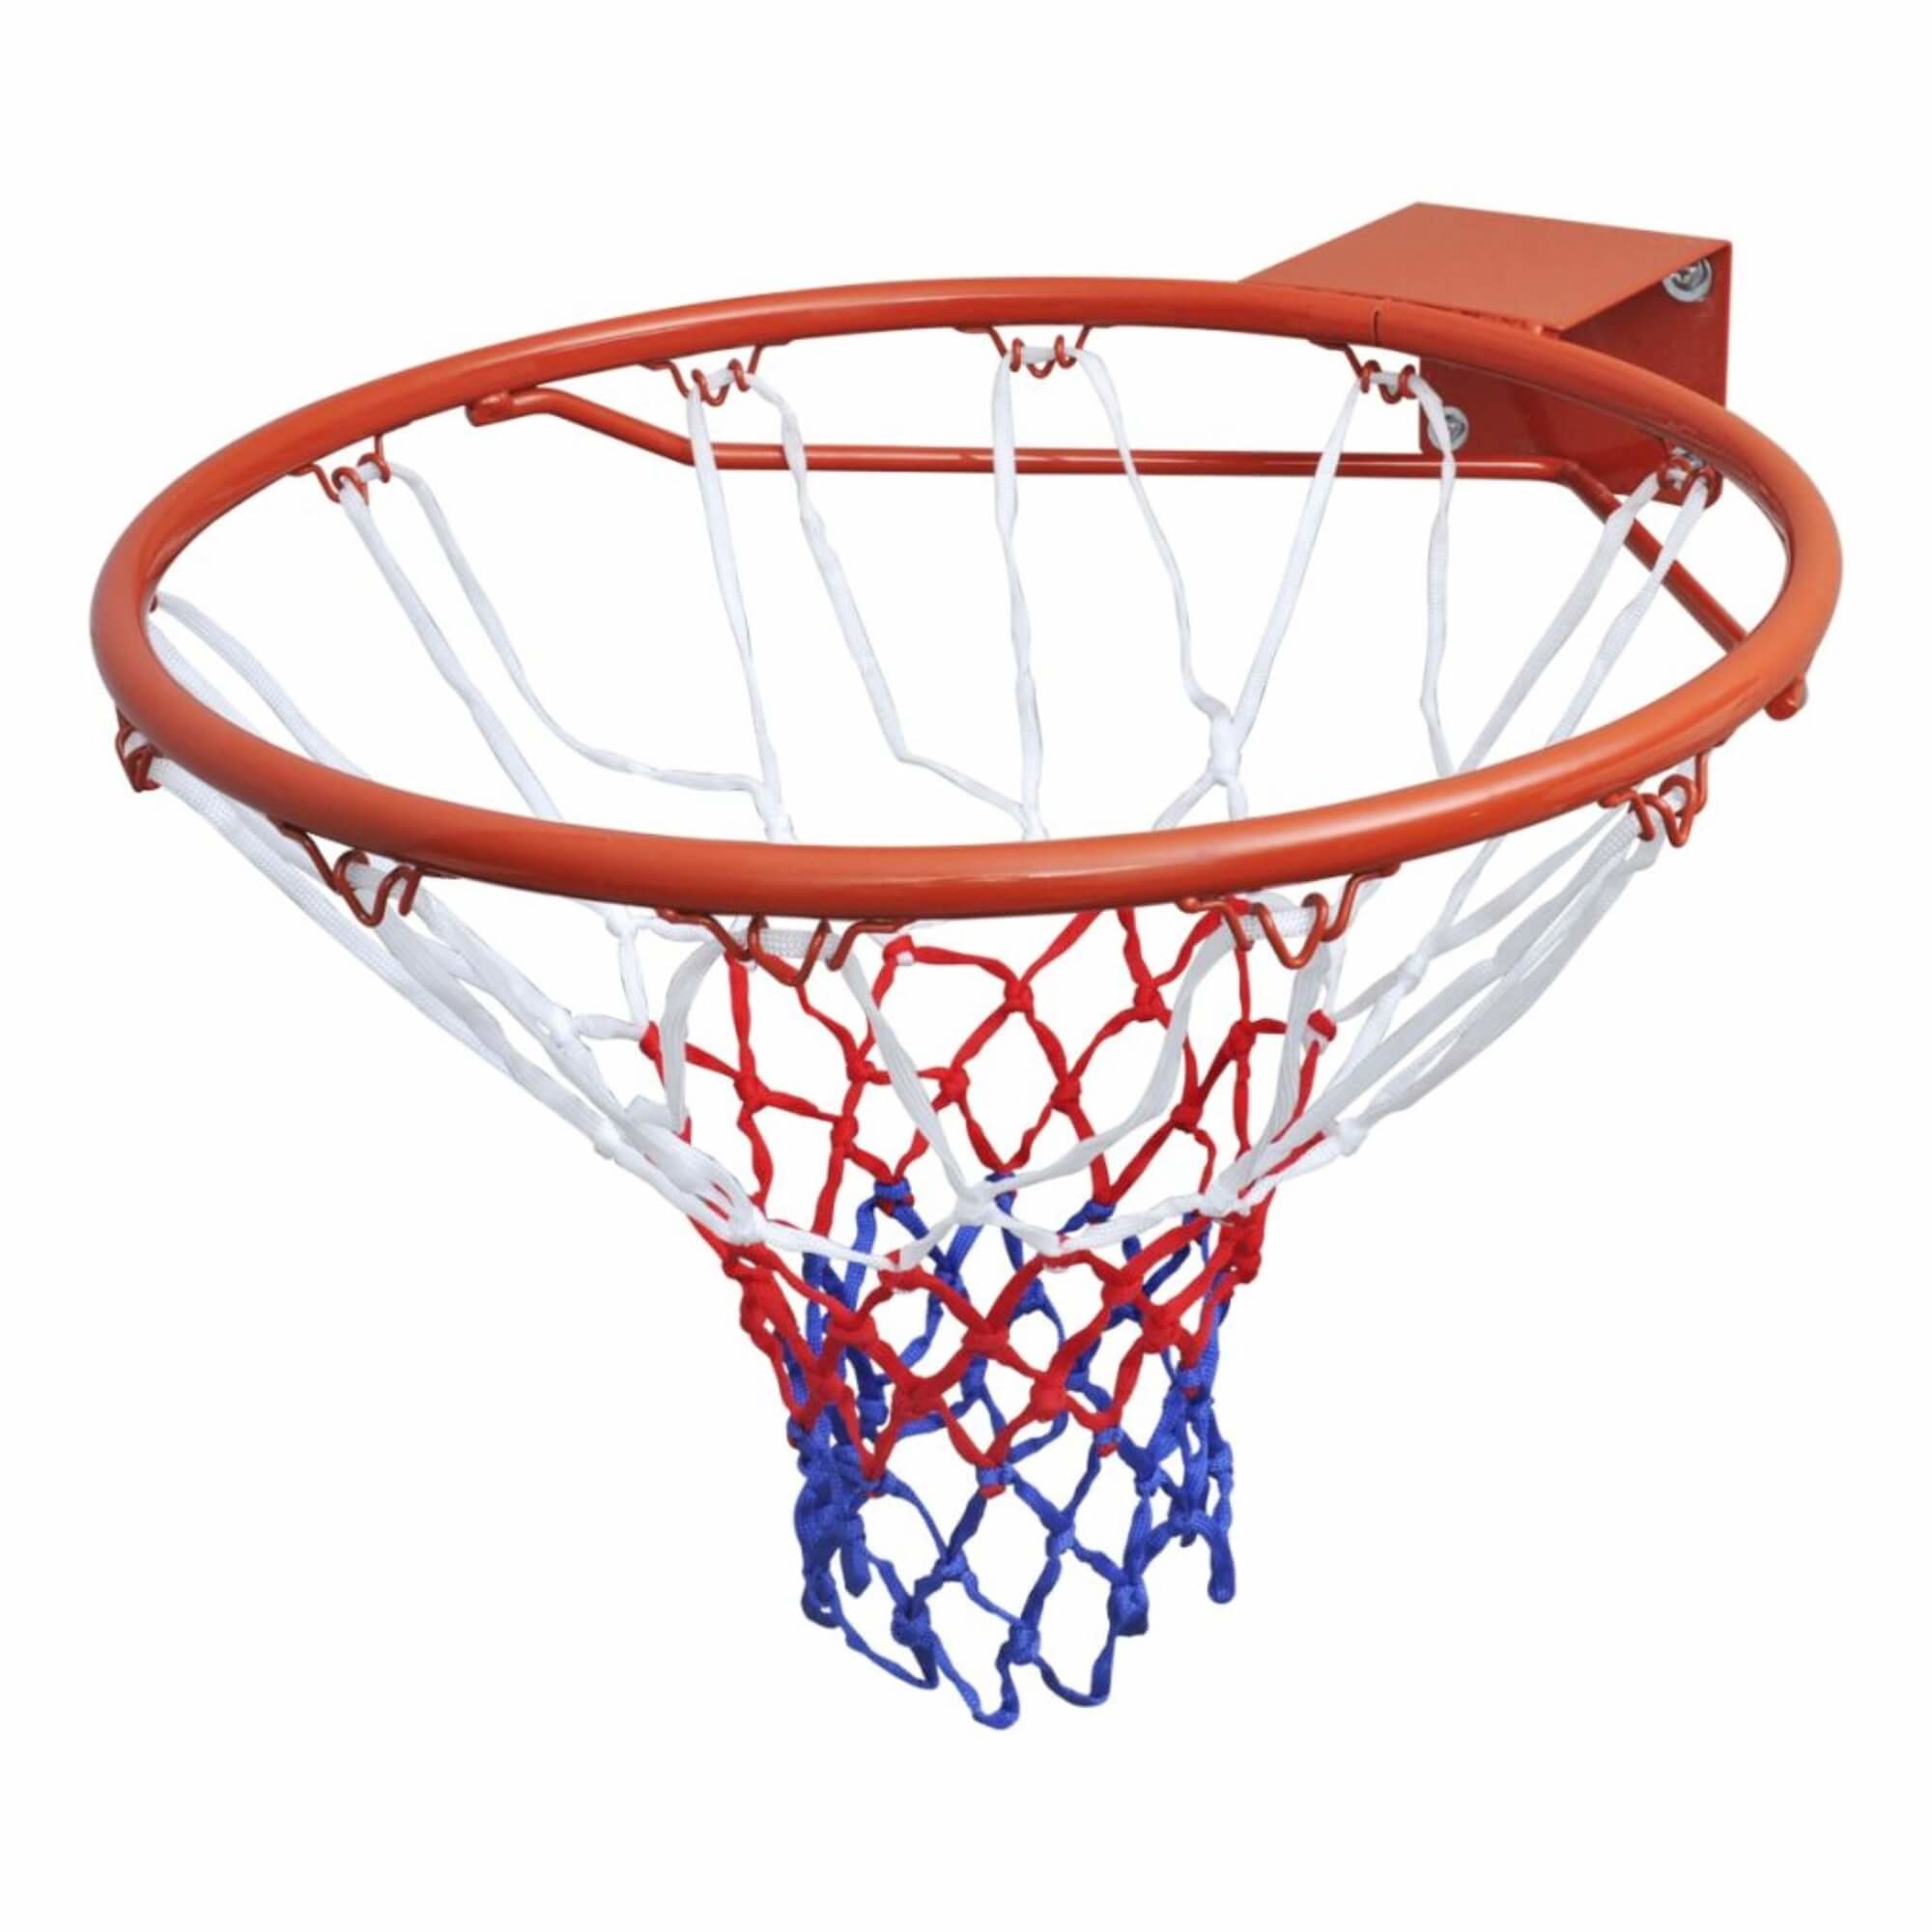 pint Smeltend films Dunlop Basketbalkorf / Basketbal ring 45cm + net (Oranje) kopen? - 2Cheap